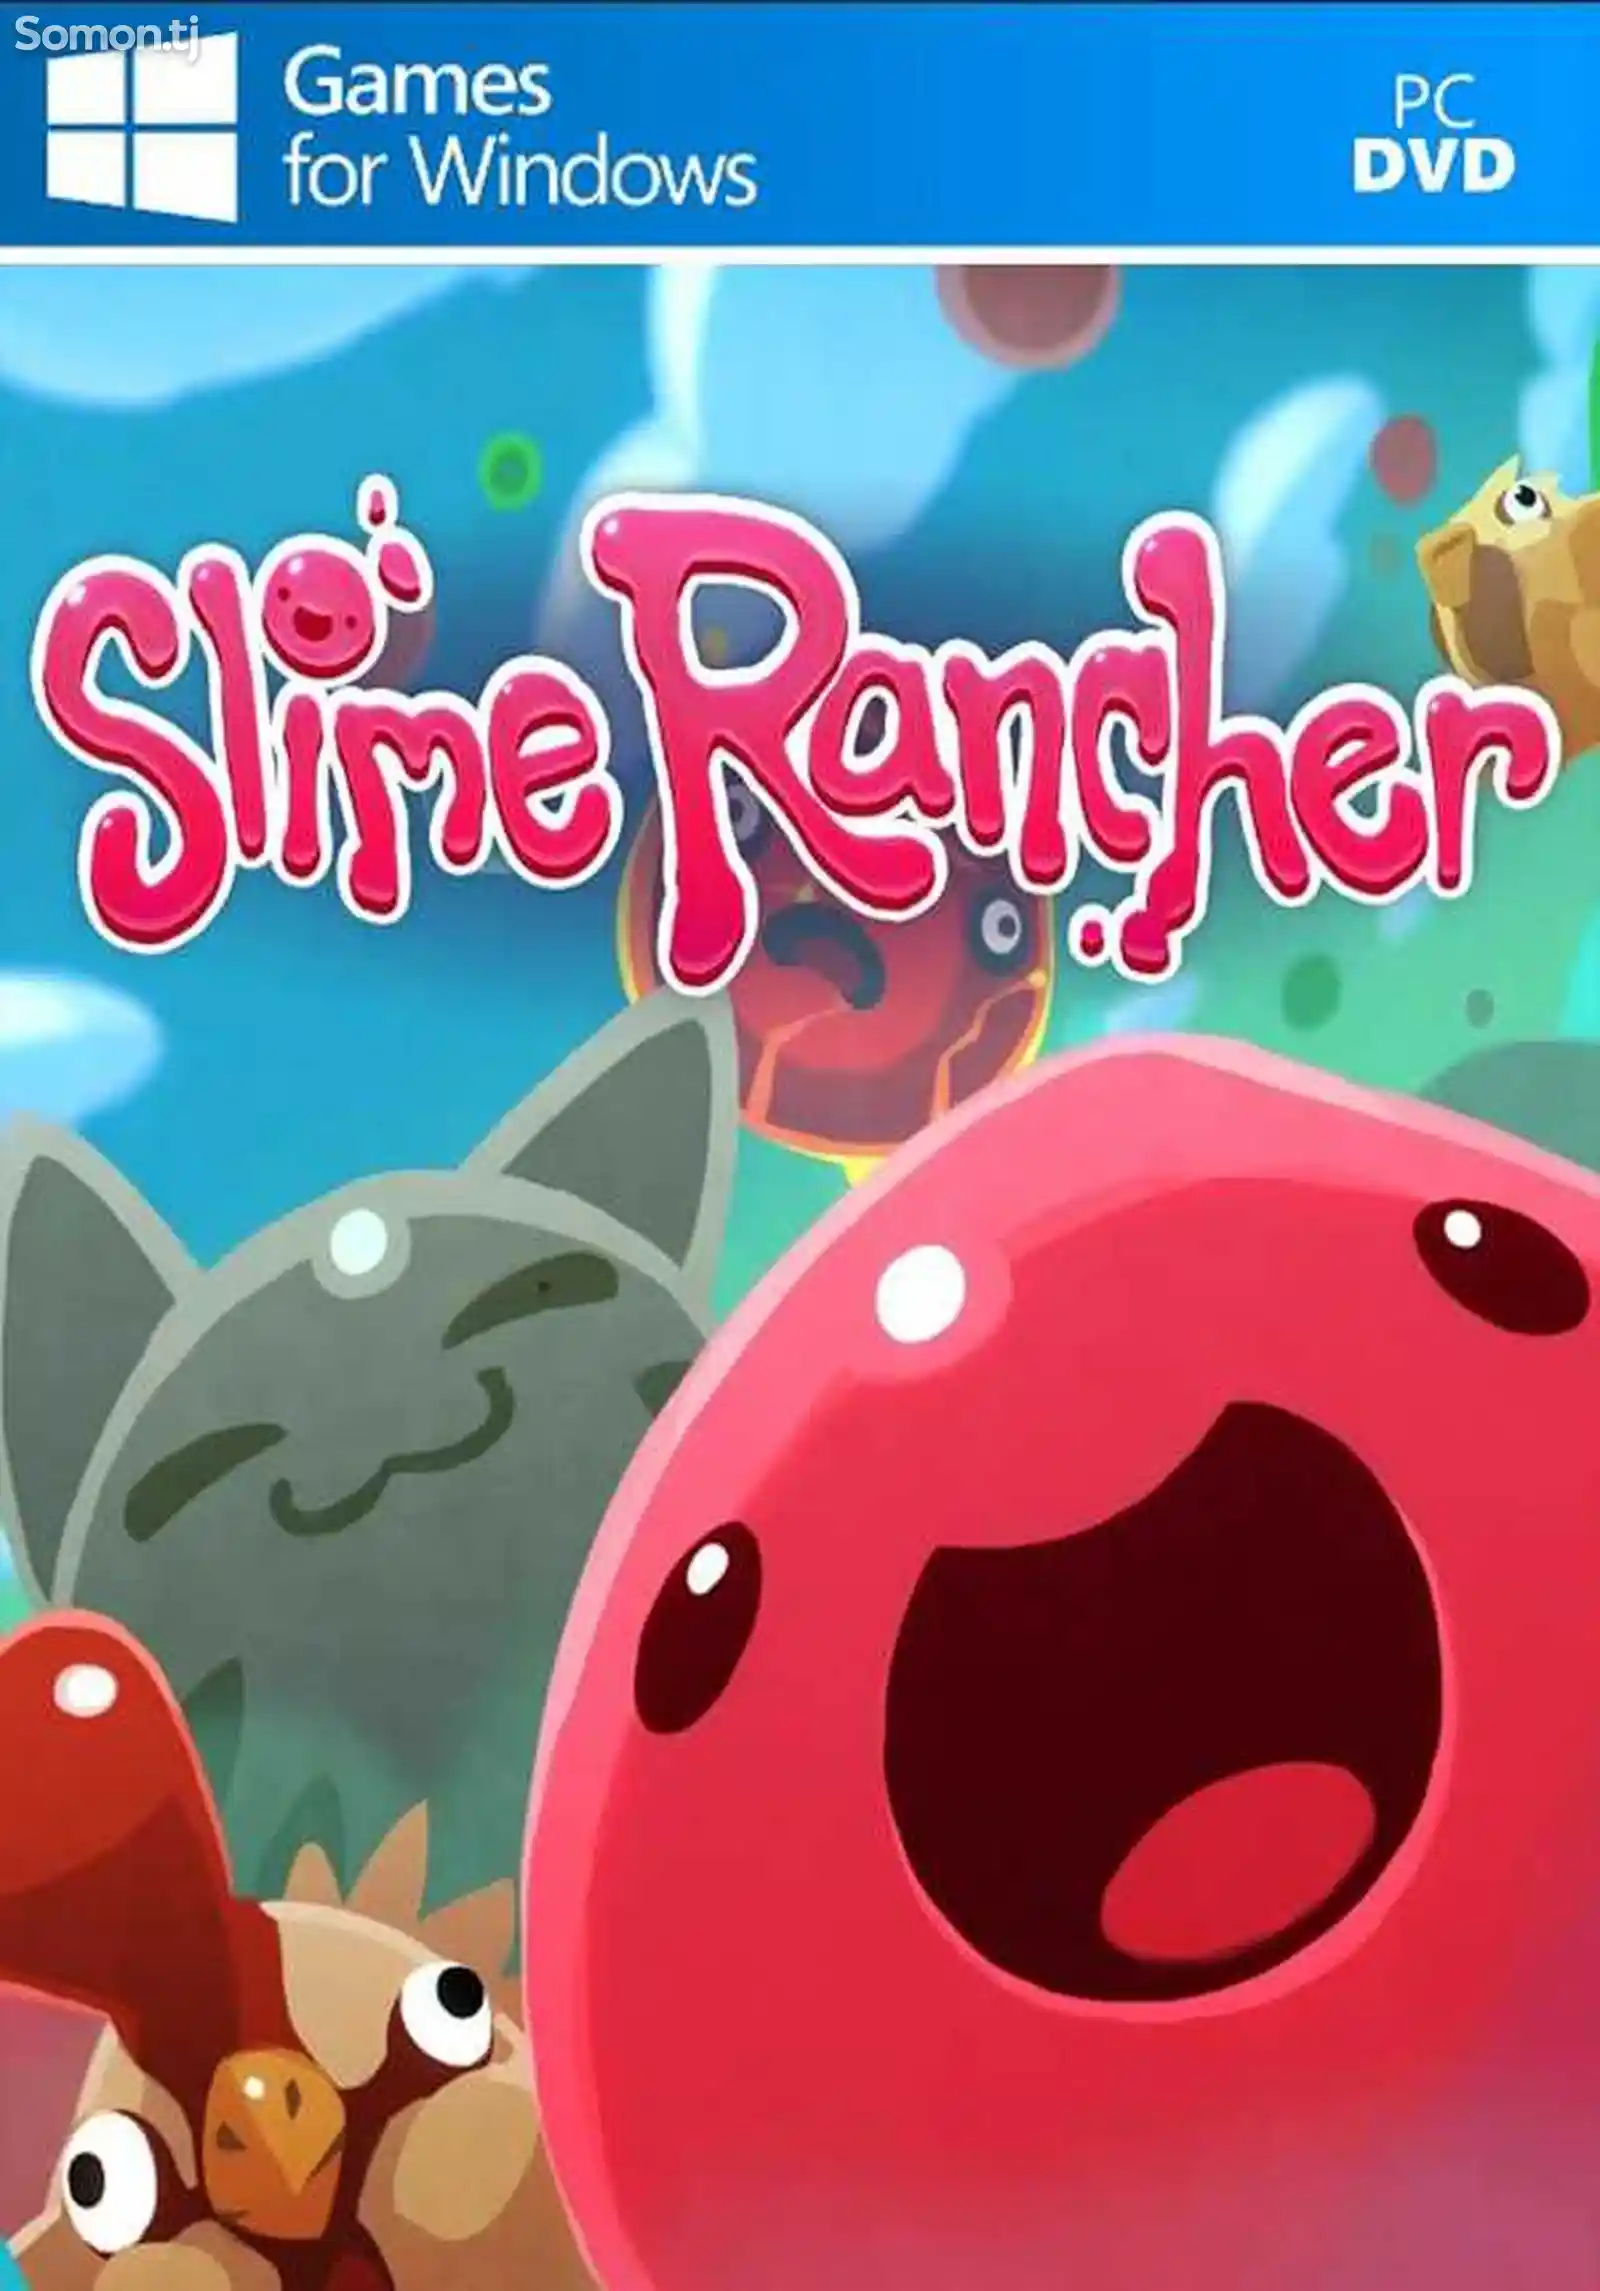 Игра Slime rancher 2 для компьютера-пк-pc-1